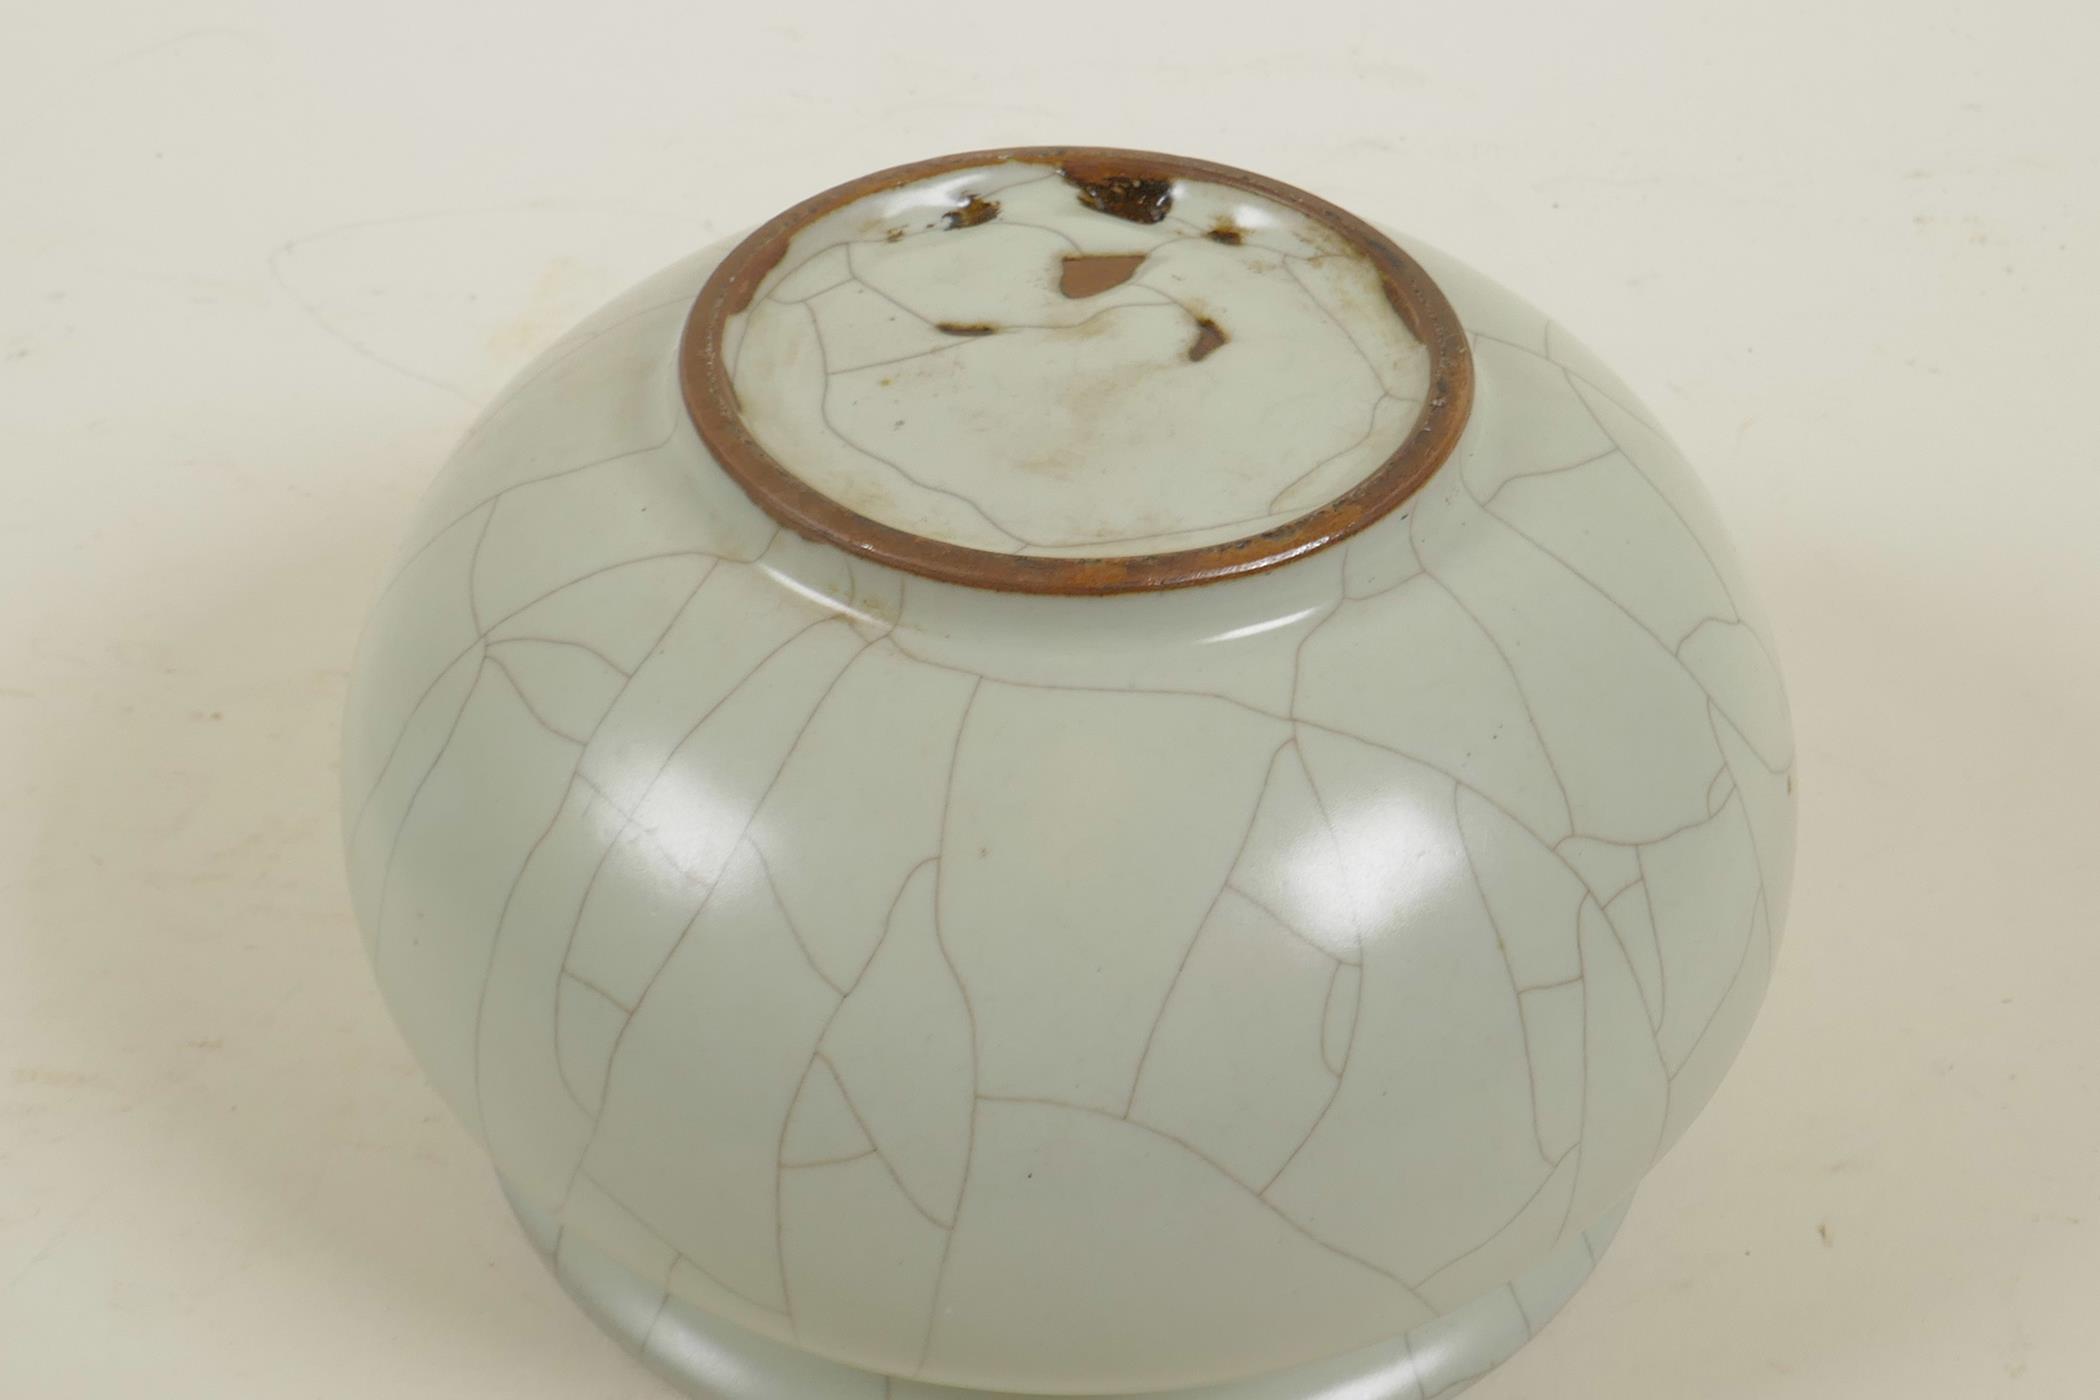 A Chinese crackle glazed porcelain bowl, 6½" diameter - Image 3 of 3